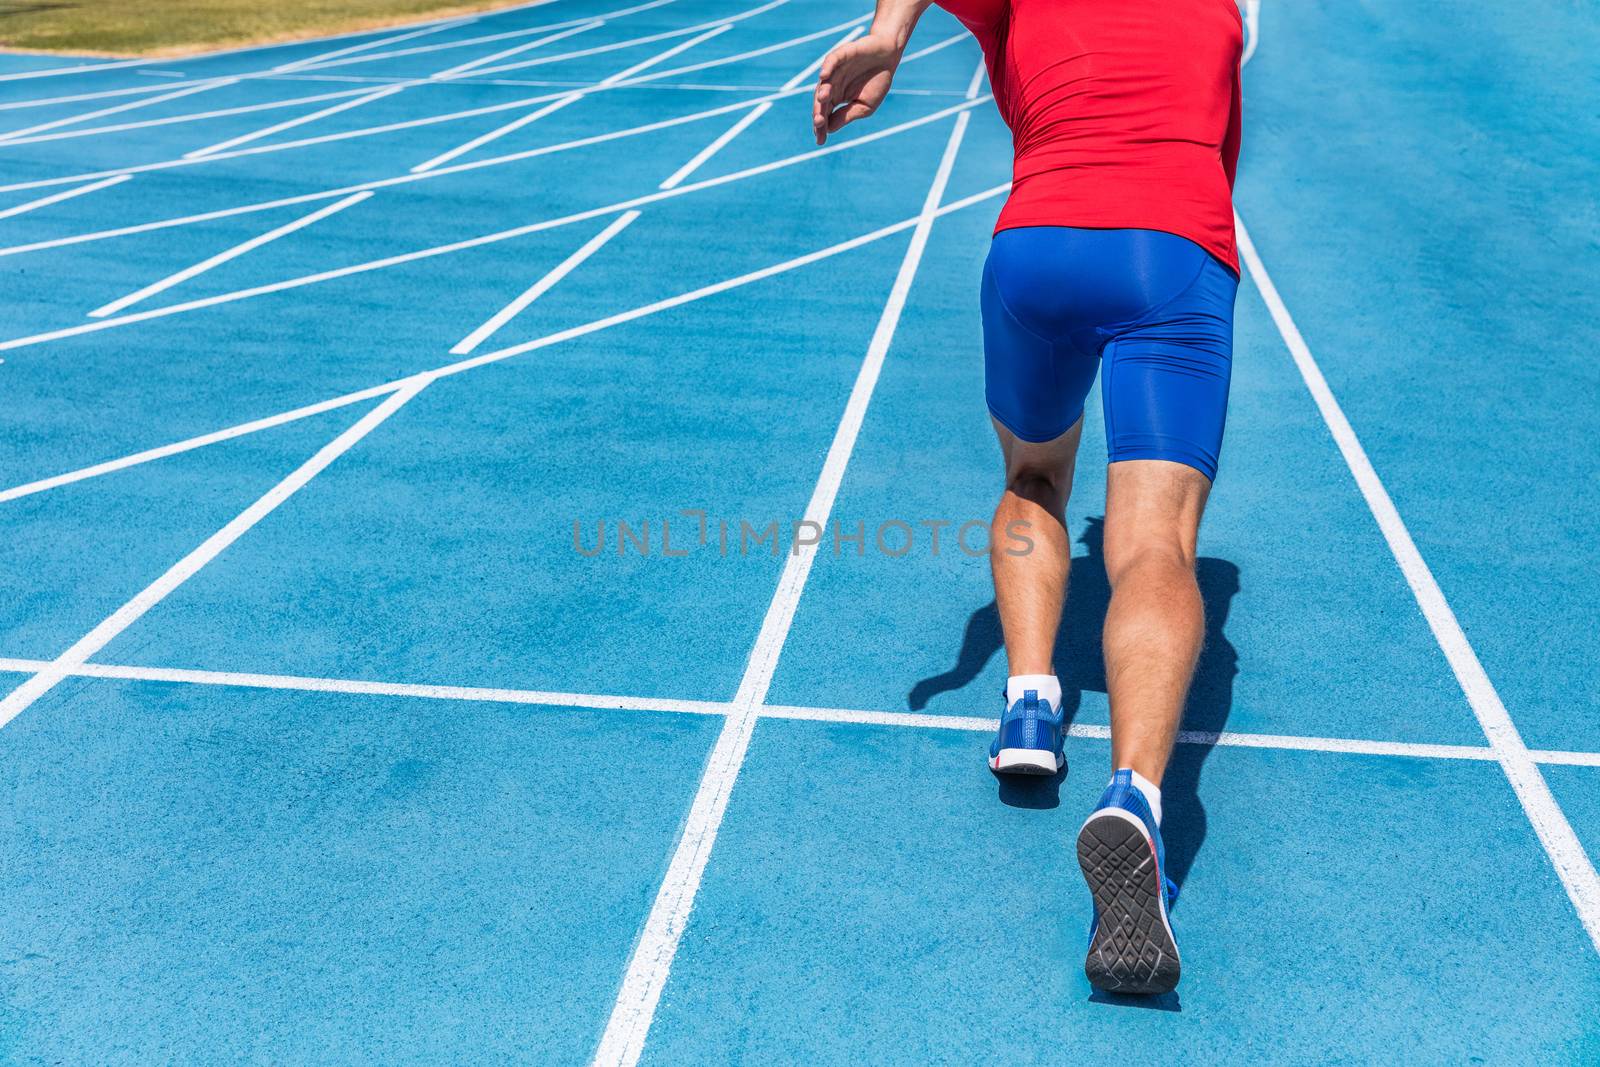 Runner athlete starting running at start of run track on blue running tracks at outdoor athletics and fiel stadium. Sprinter. Sport and fitness man lower body, legs and running shoes sprinting.